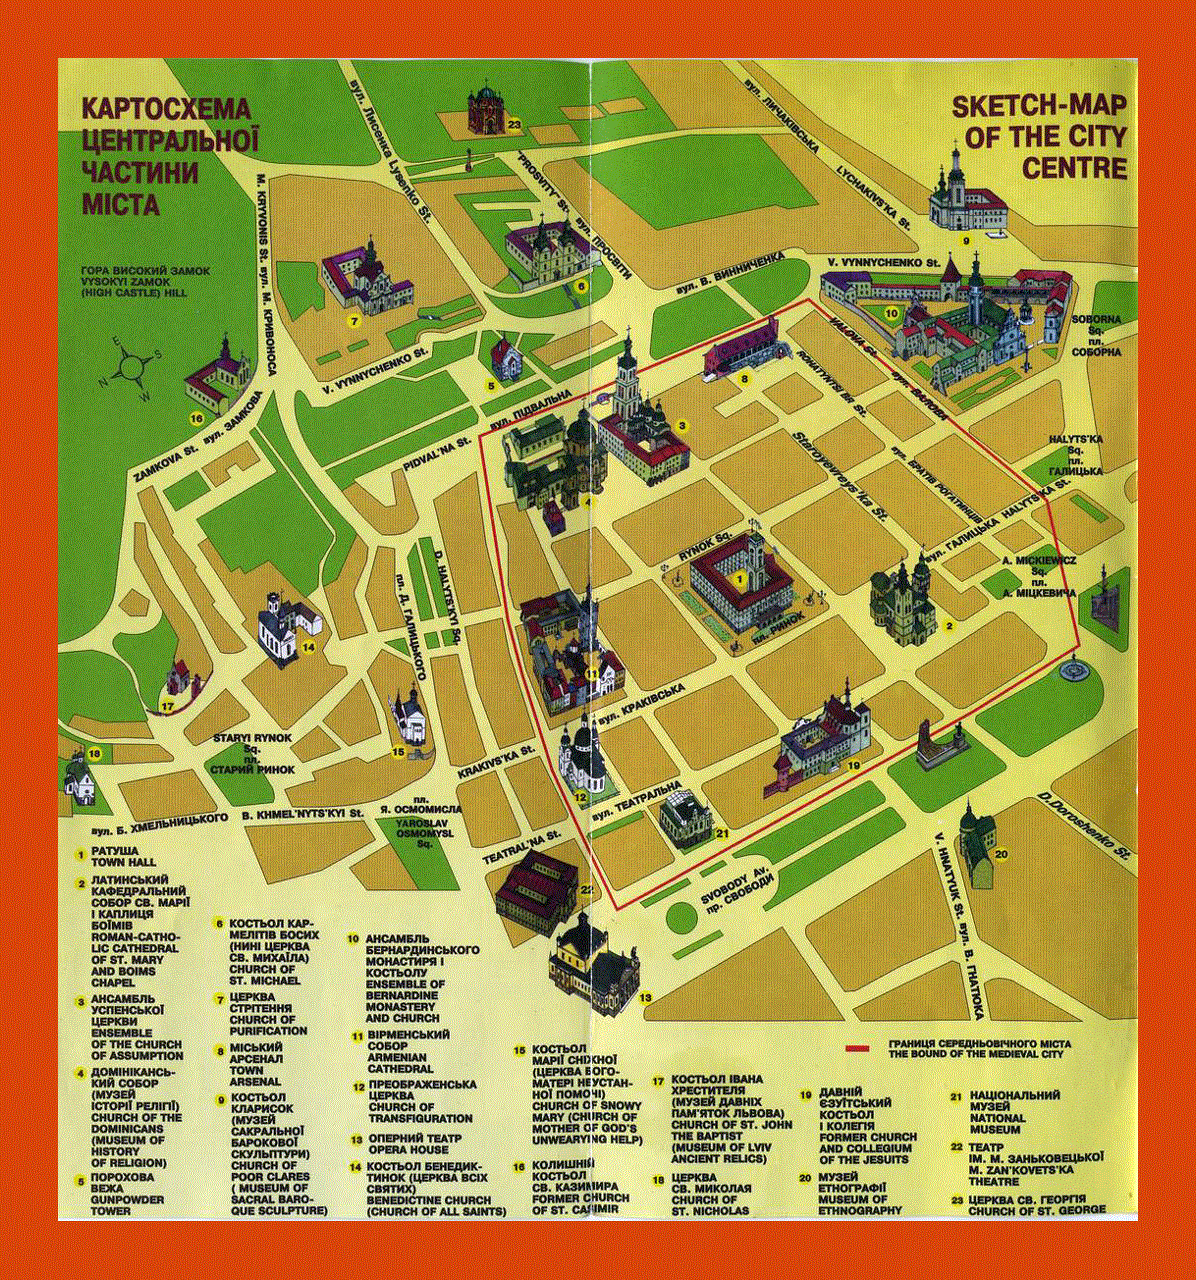 Tourist map of Lviv city center in ukrainian and english